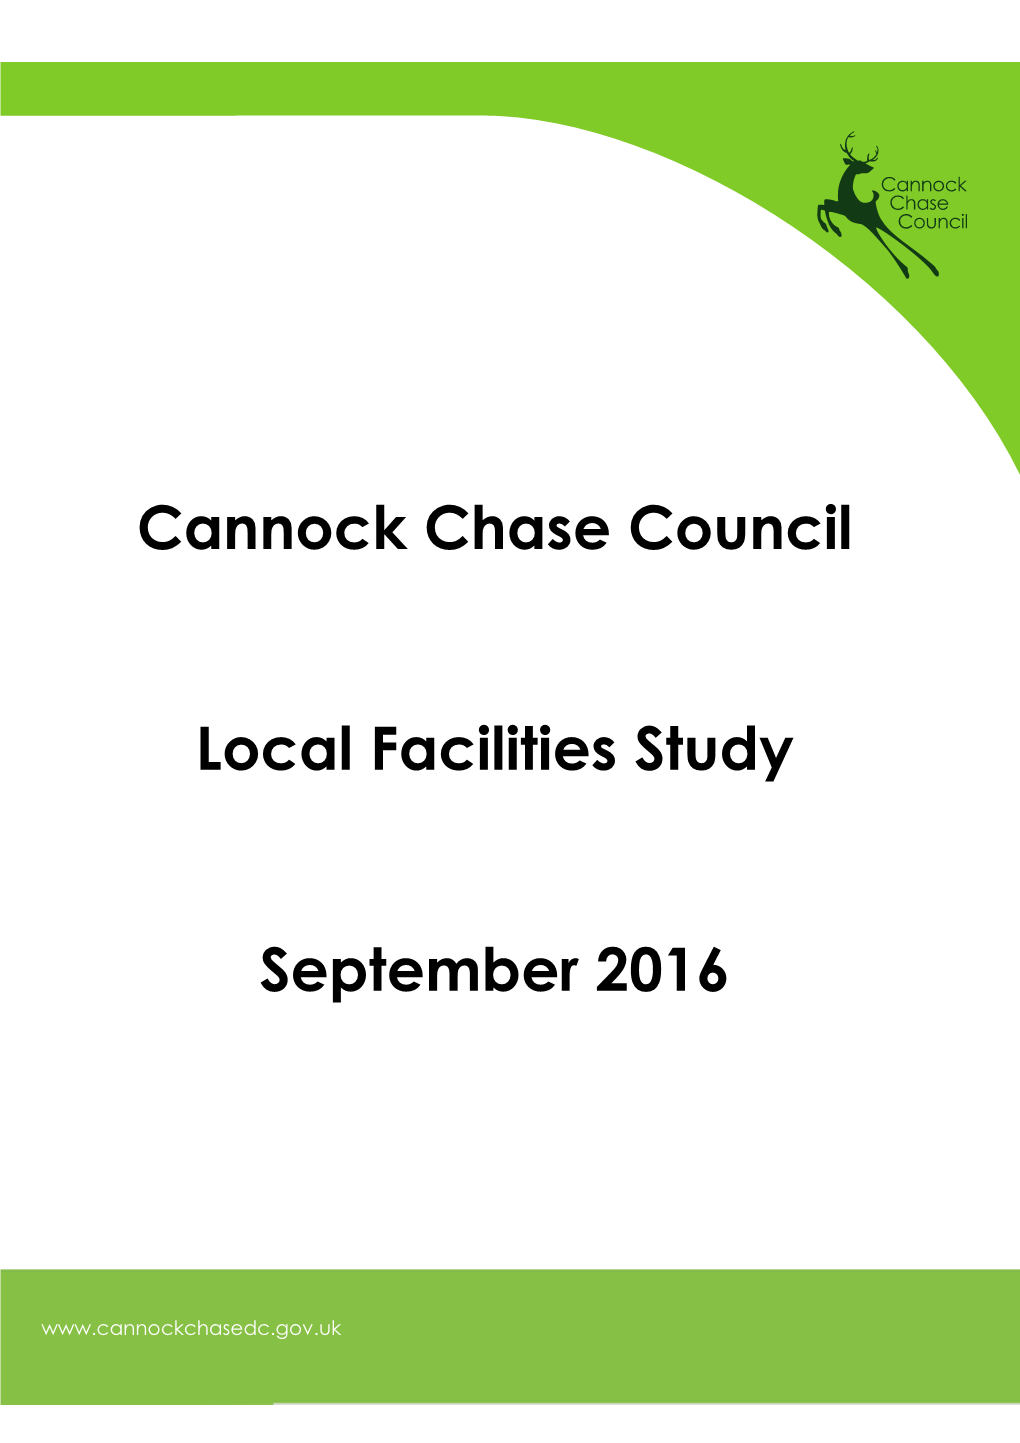 Local Facilities Study (September 2016)